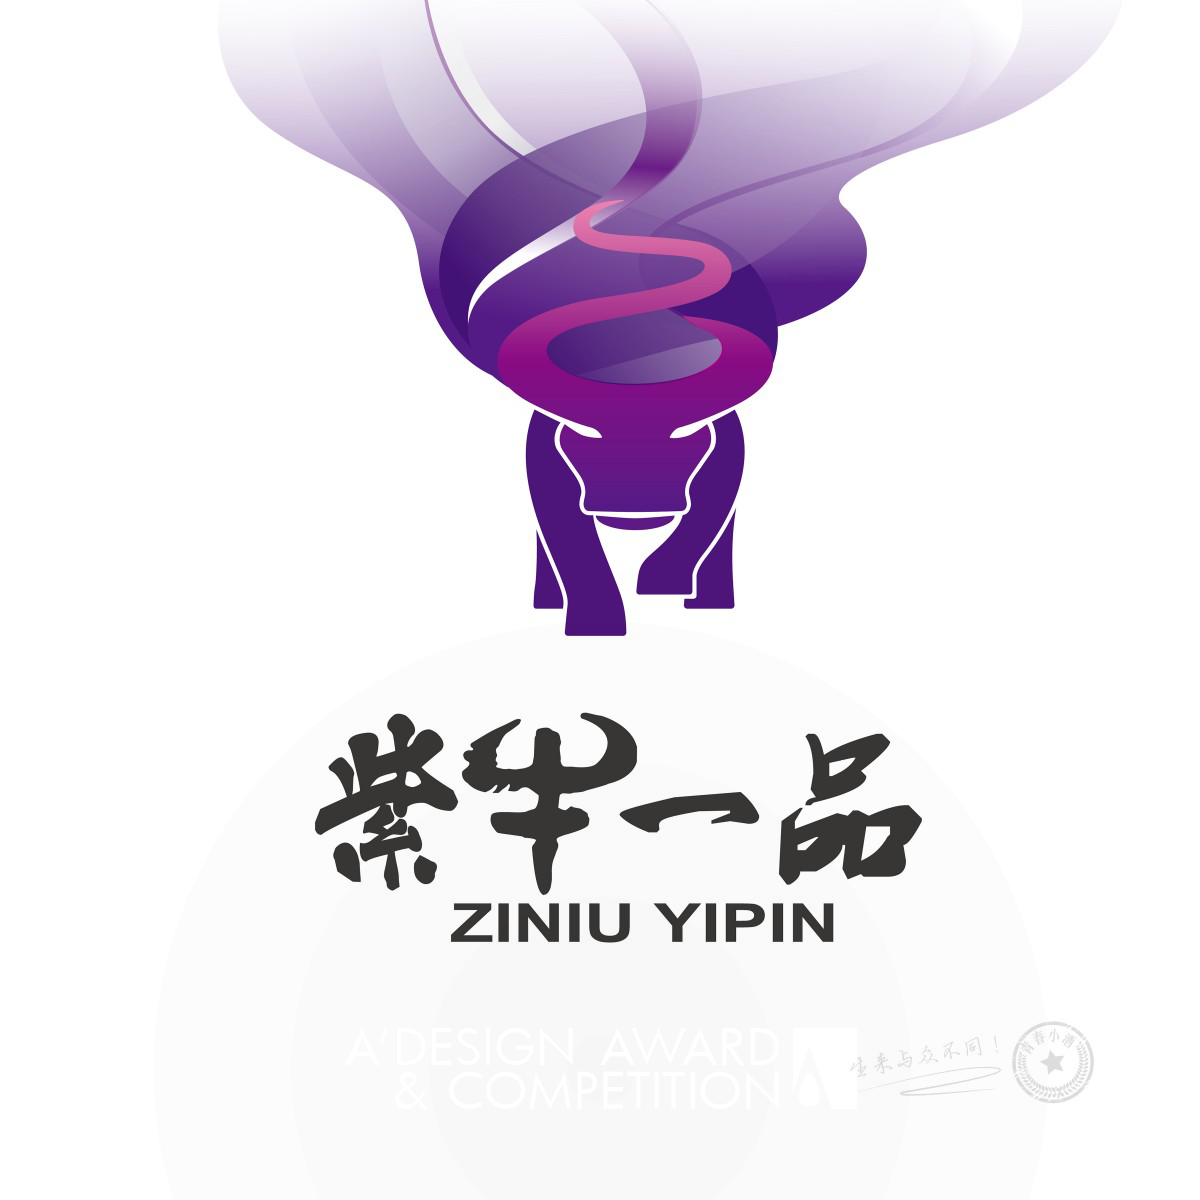 Ziniu Yipin